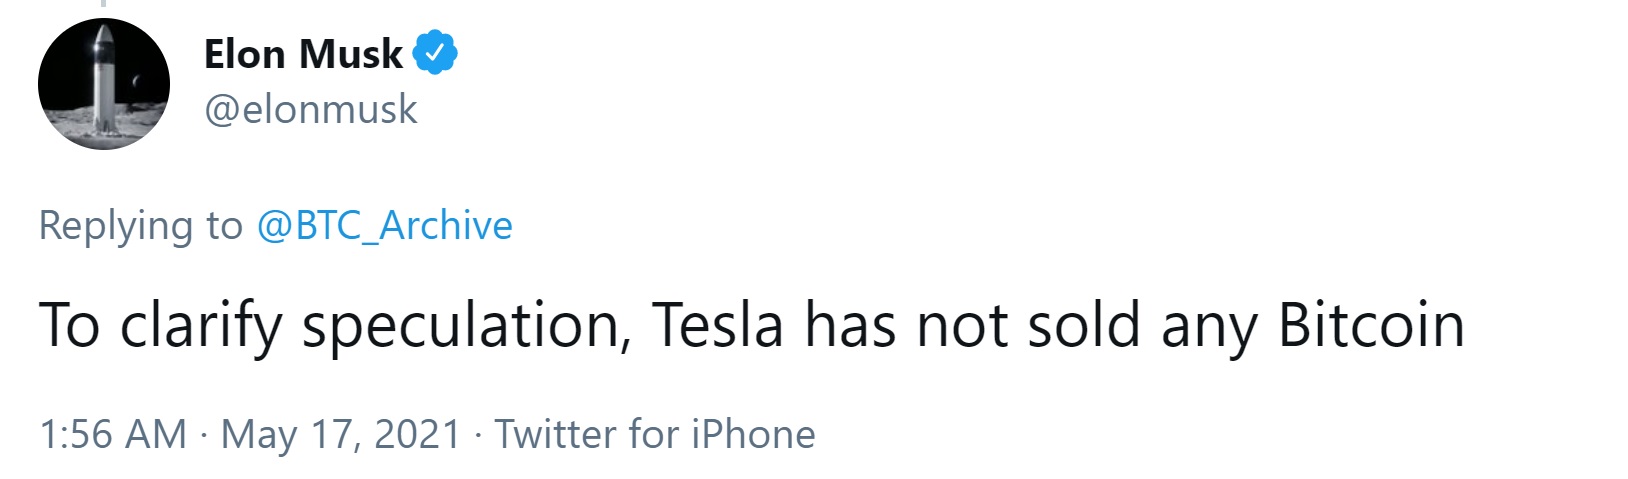 Elon Musk Discloses 'Tesla Has Not Sold Any Bitcoin'